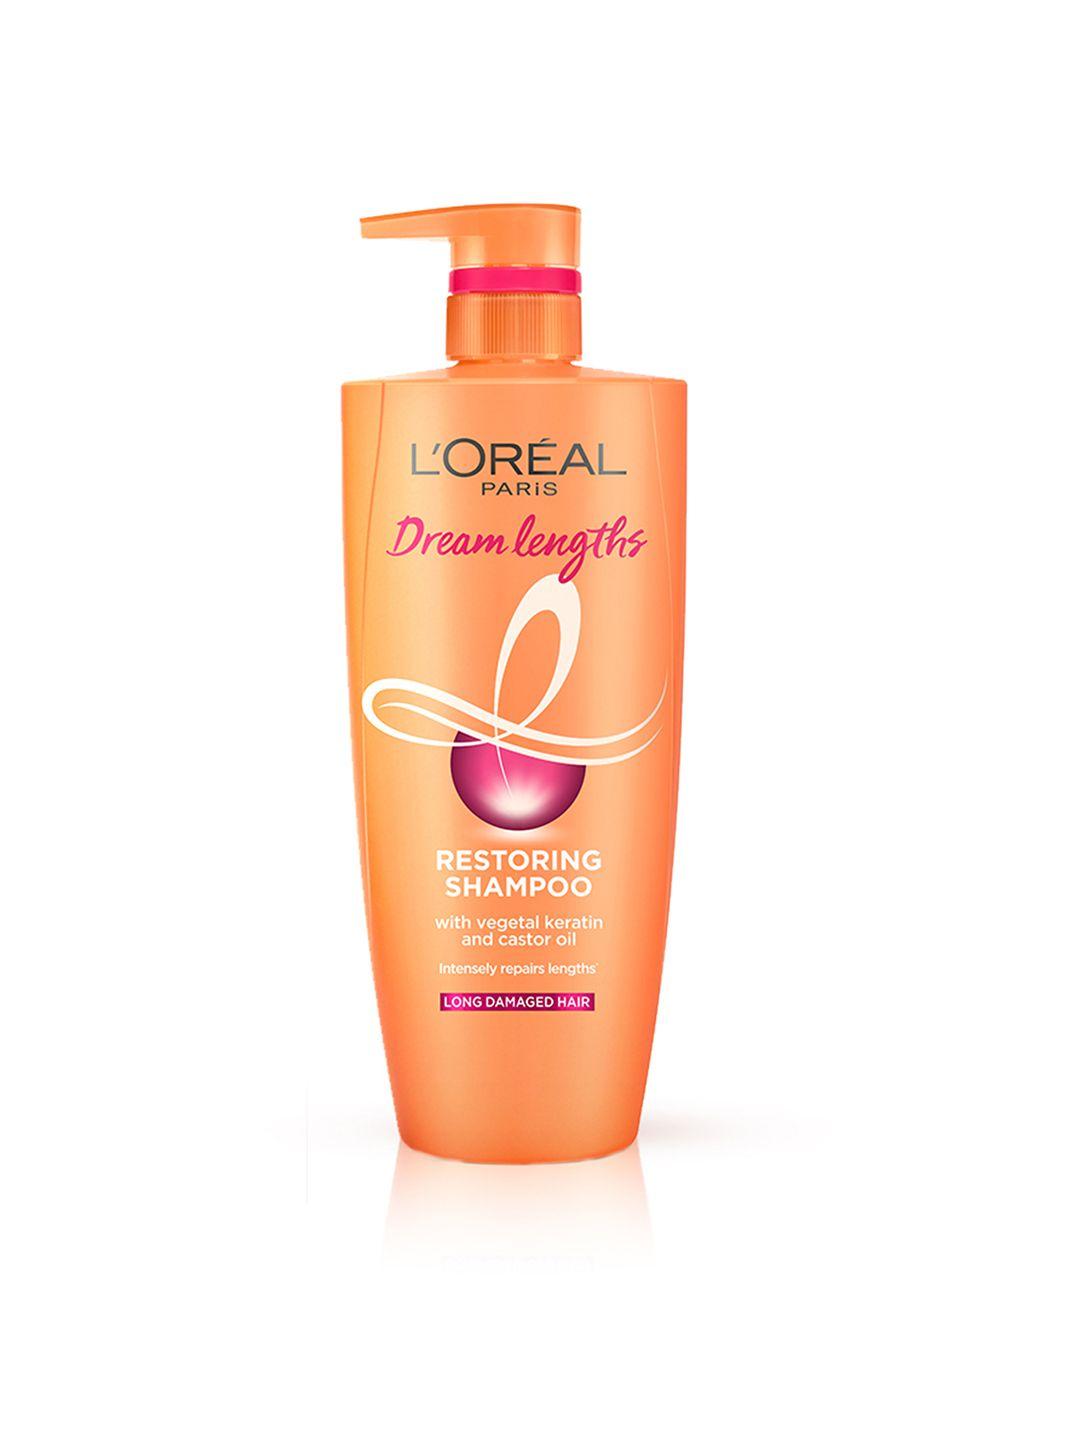 LOreal Paris Dream Lengths Restoring Shampoo with Vegetal Keratin & Castor Oil 1L